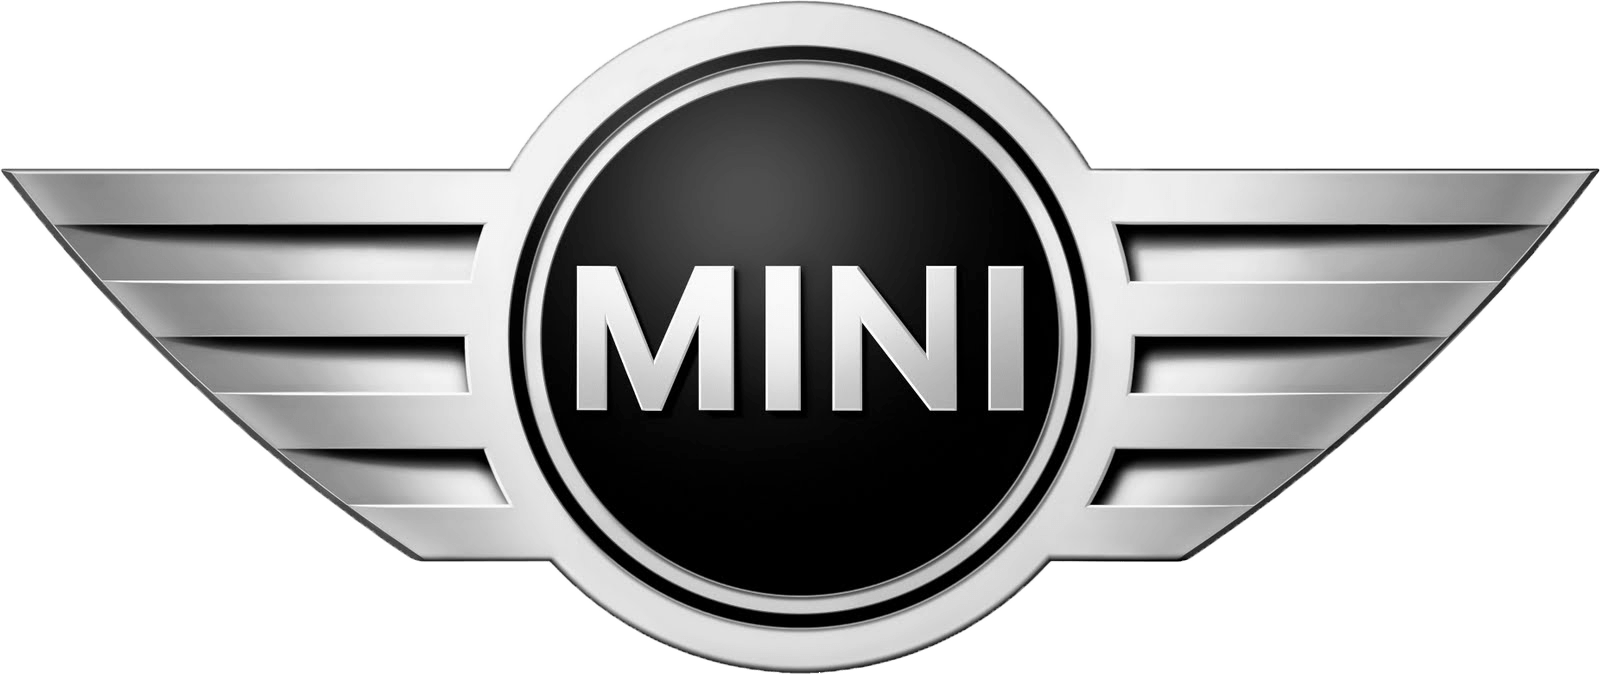 Mini Car Logo Png Brand Image PNG Image